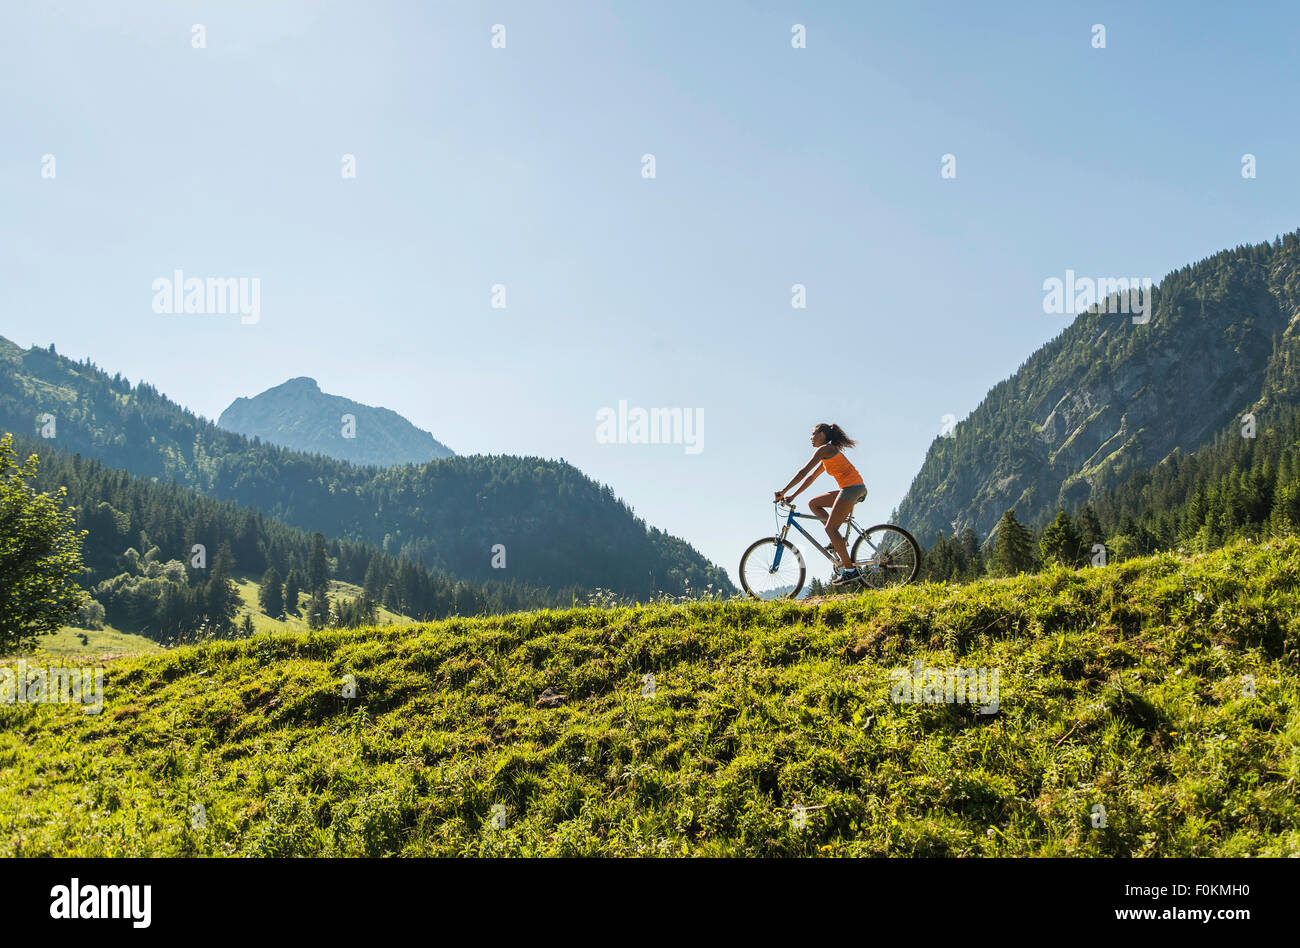 Austria, Tyrol, Tannheim Valley, young woman on mountain bike in alpine landscape Stock Photo